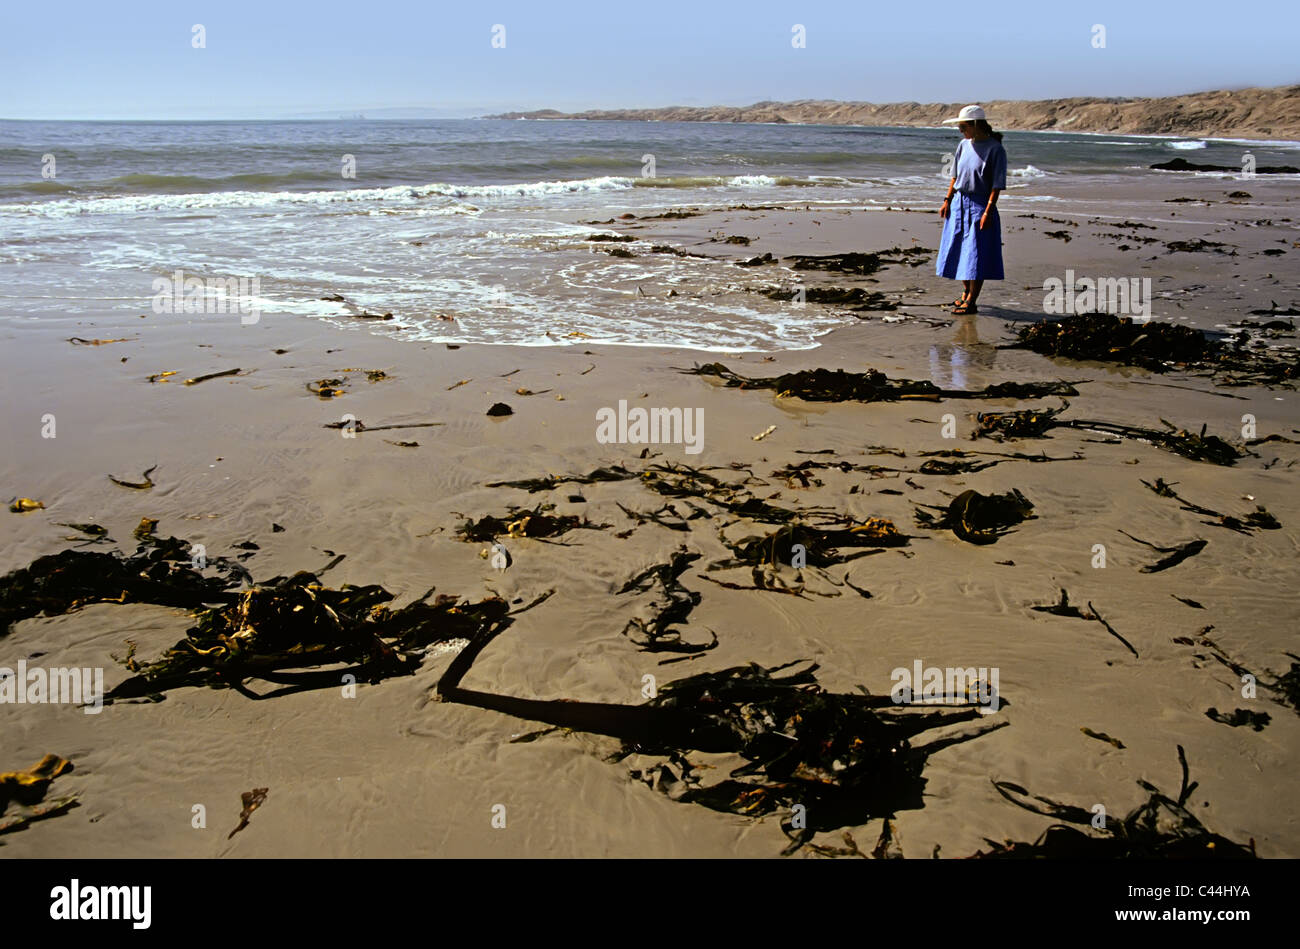 Woman in blue dress on beach Namibia on desert coast Stock Photo